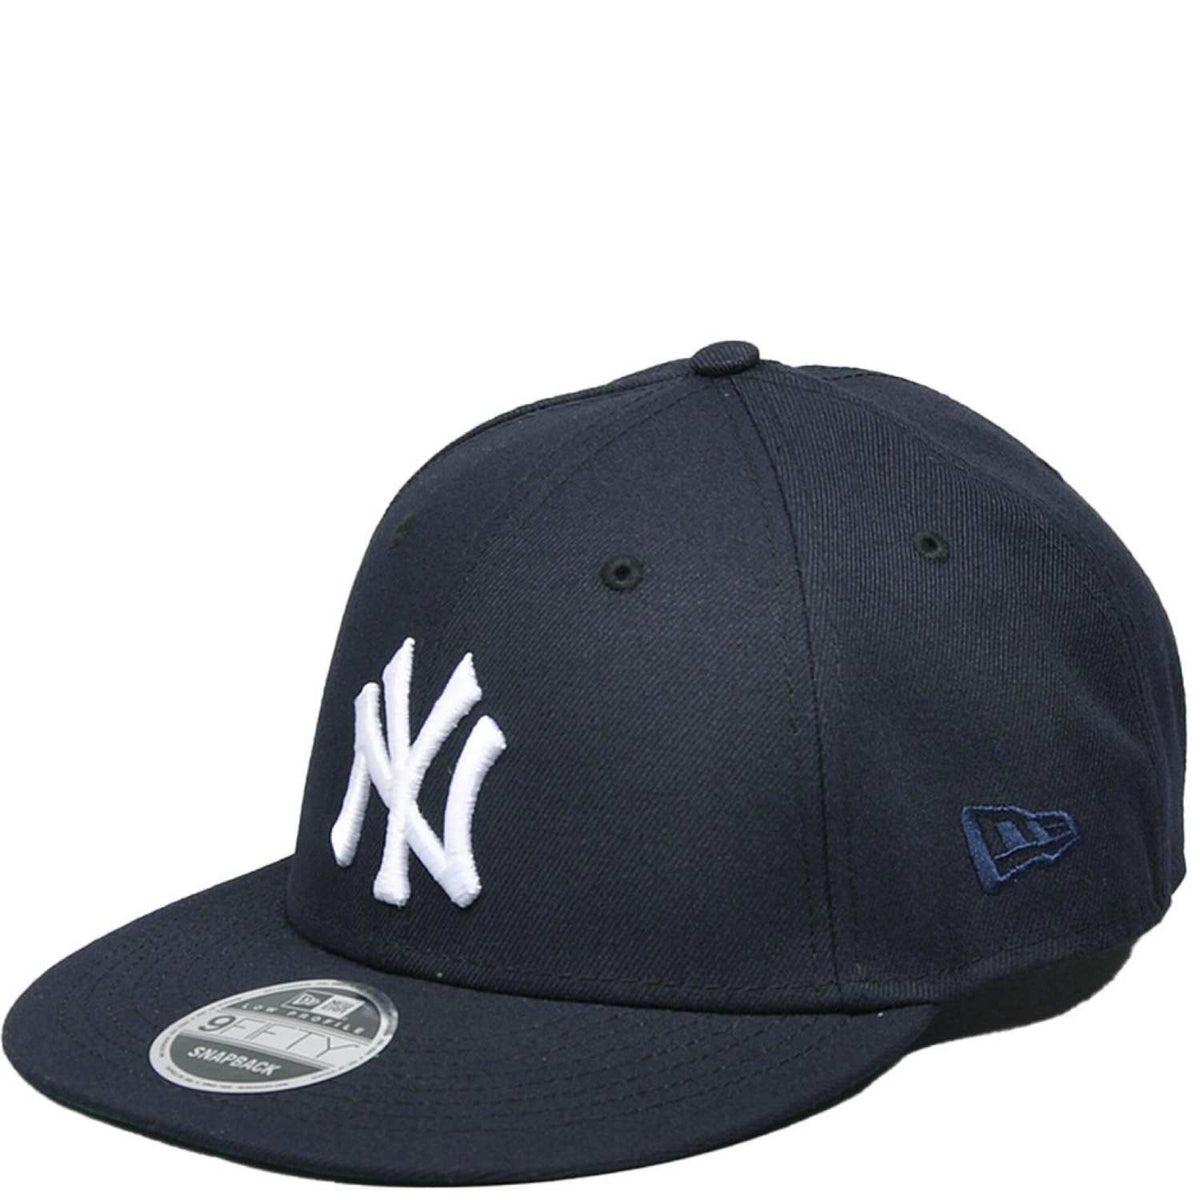 Alltimers New Era Yankees Cap Navy